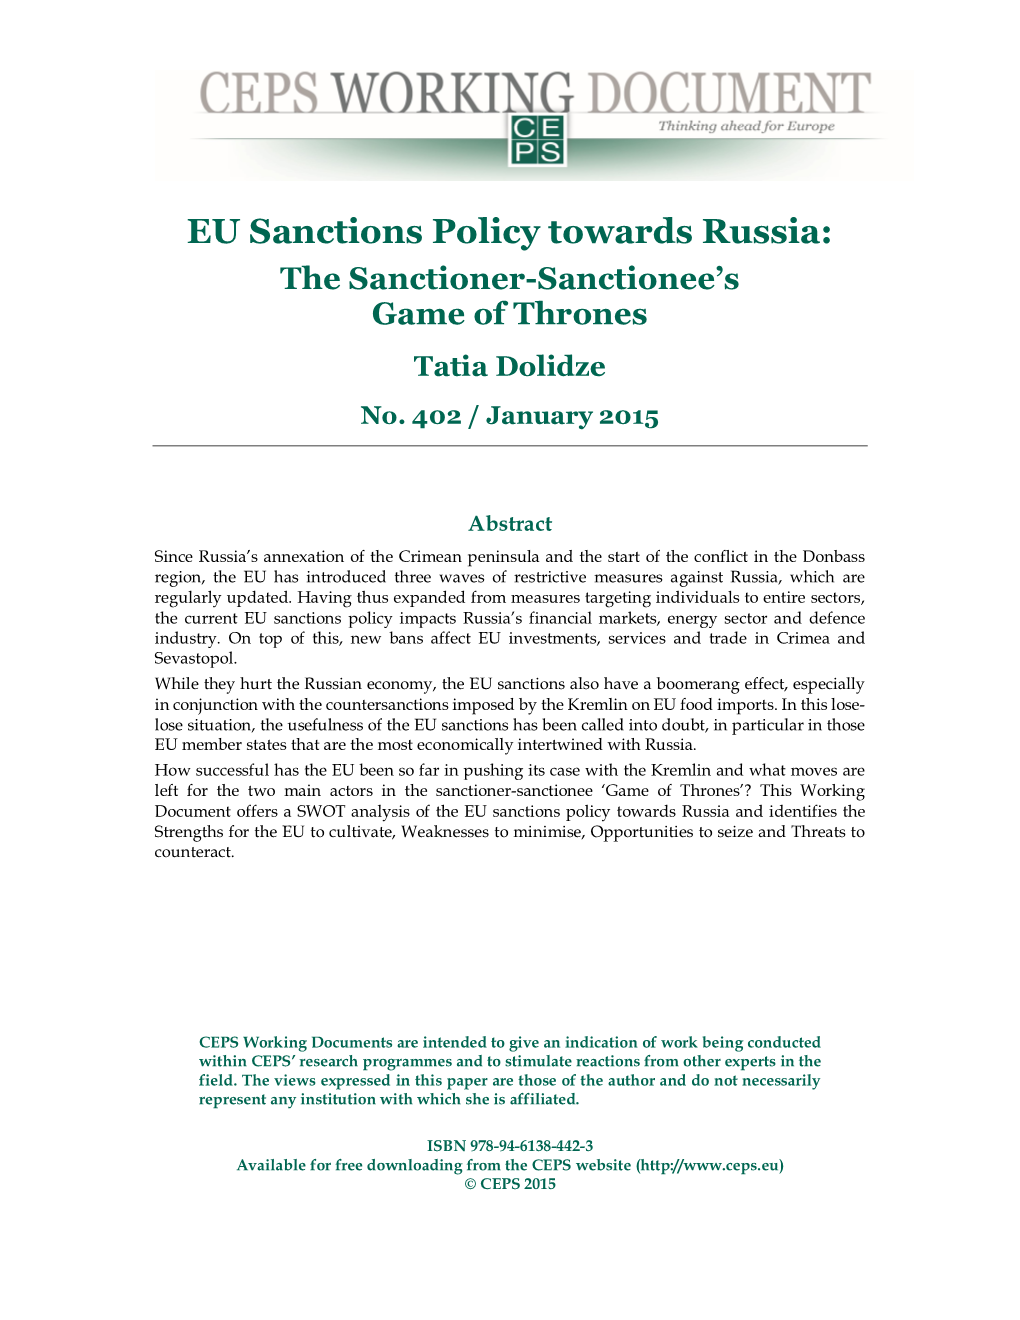 EU Sanctions Policy Towards Russia: the Sanctioner-Sanctionee’S Game of Thrones Tatia Dolidze No